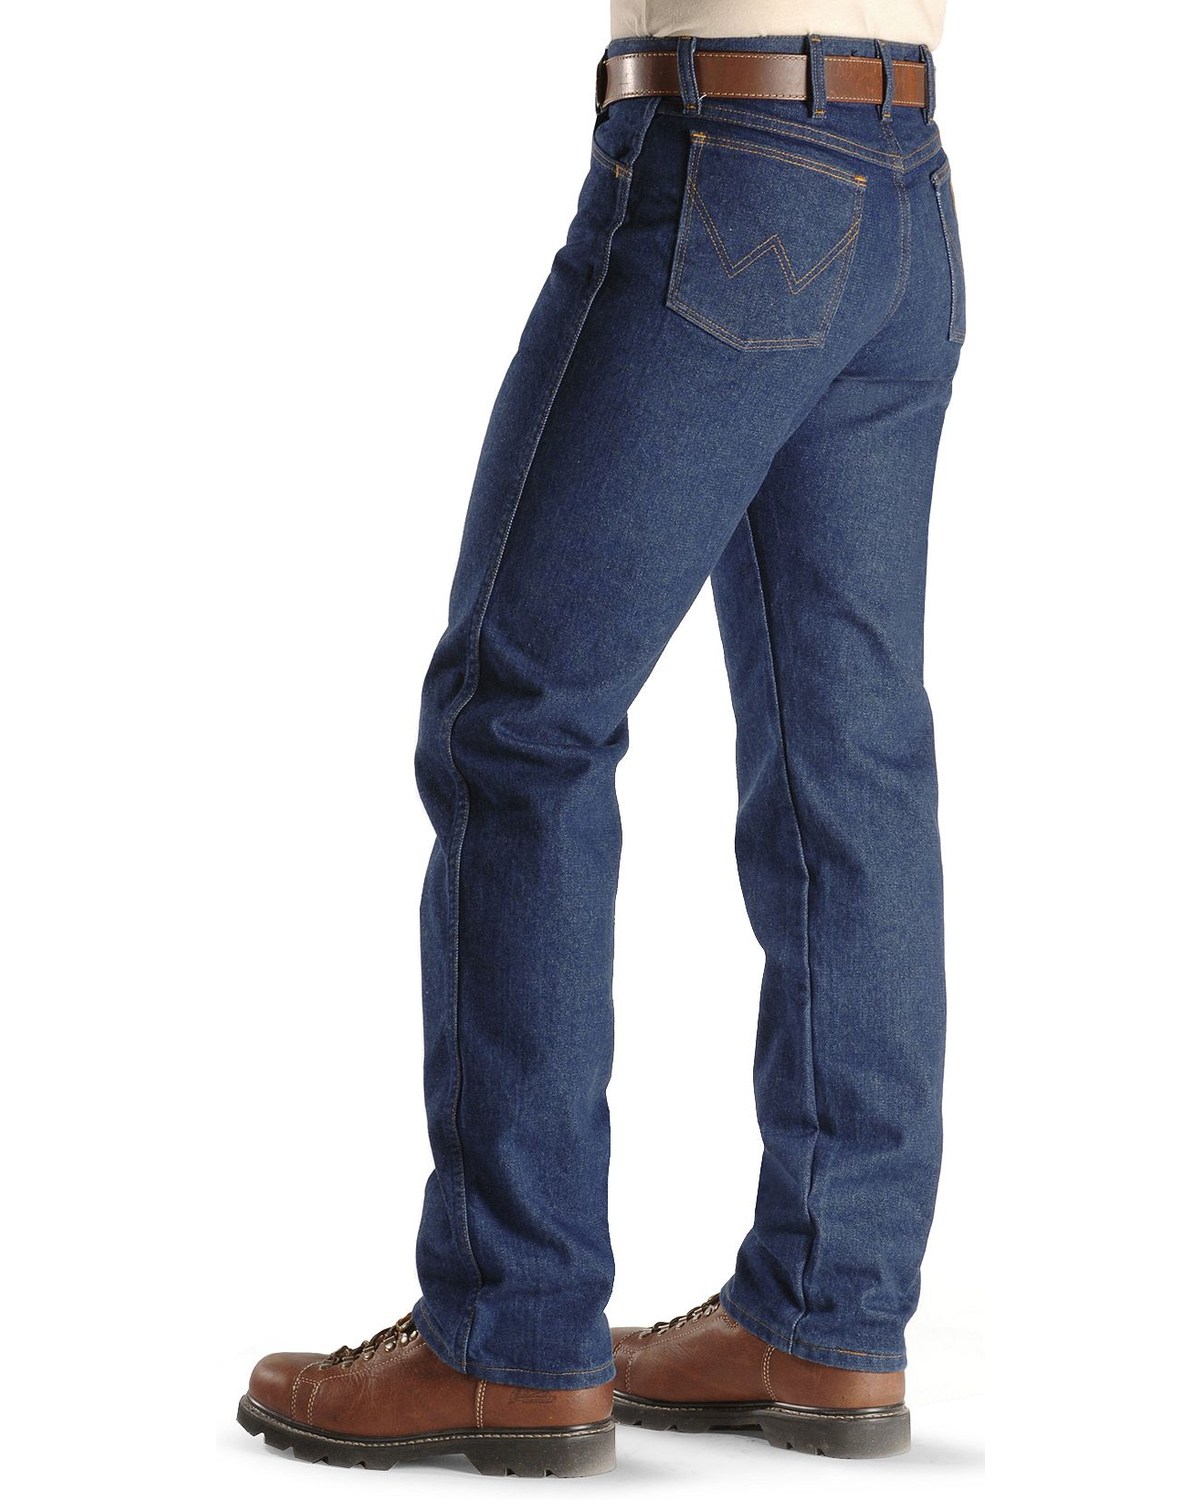 Wrangler Men's Flame Resistant Original Fit Jeans